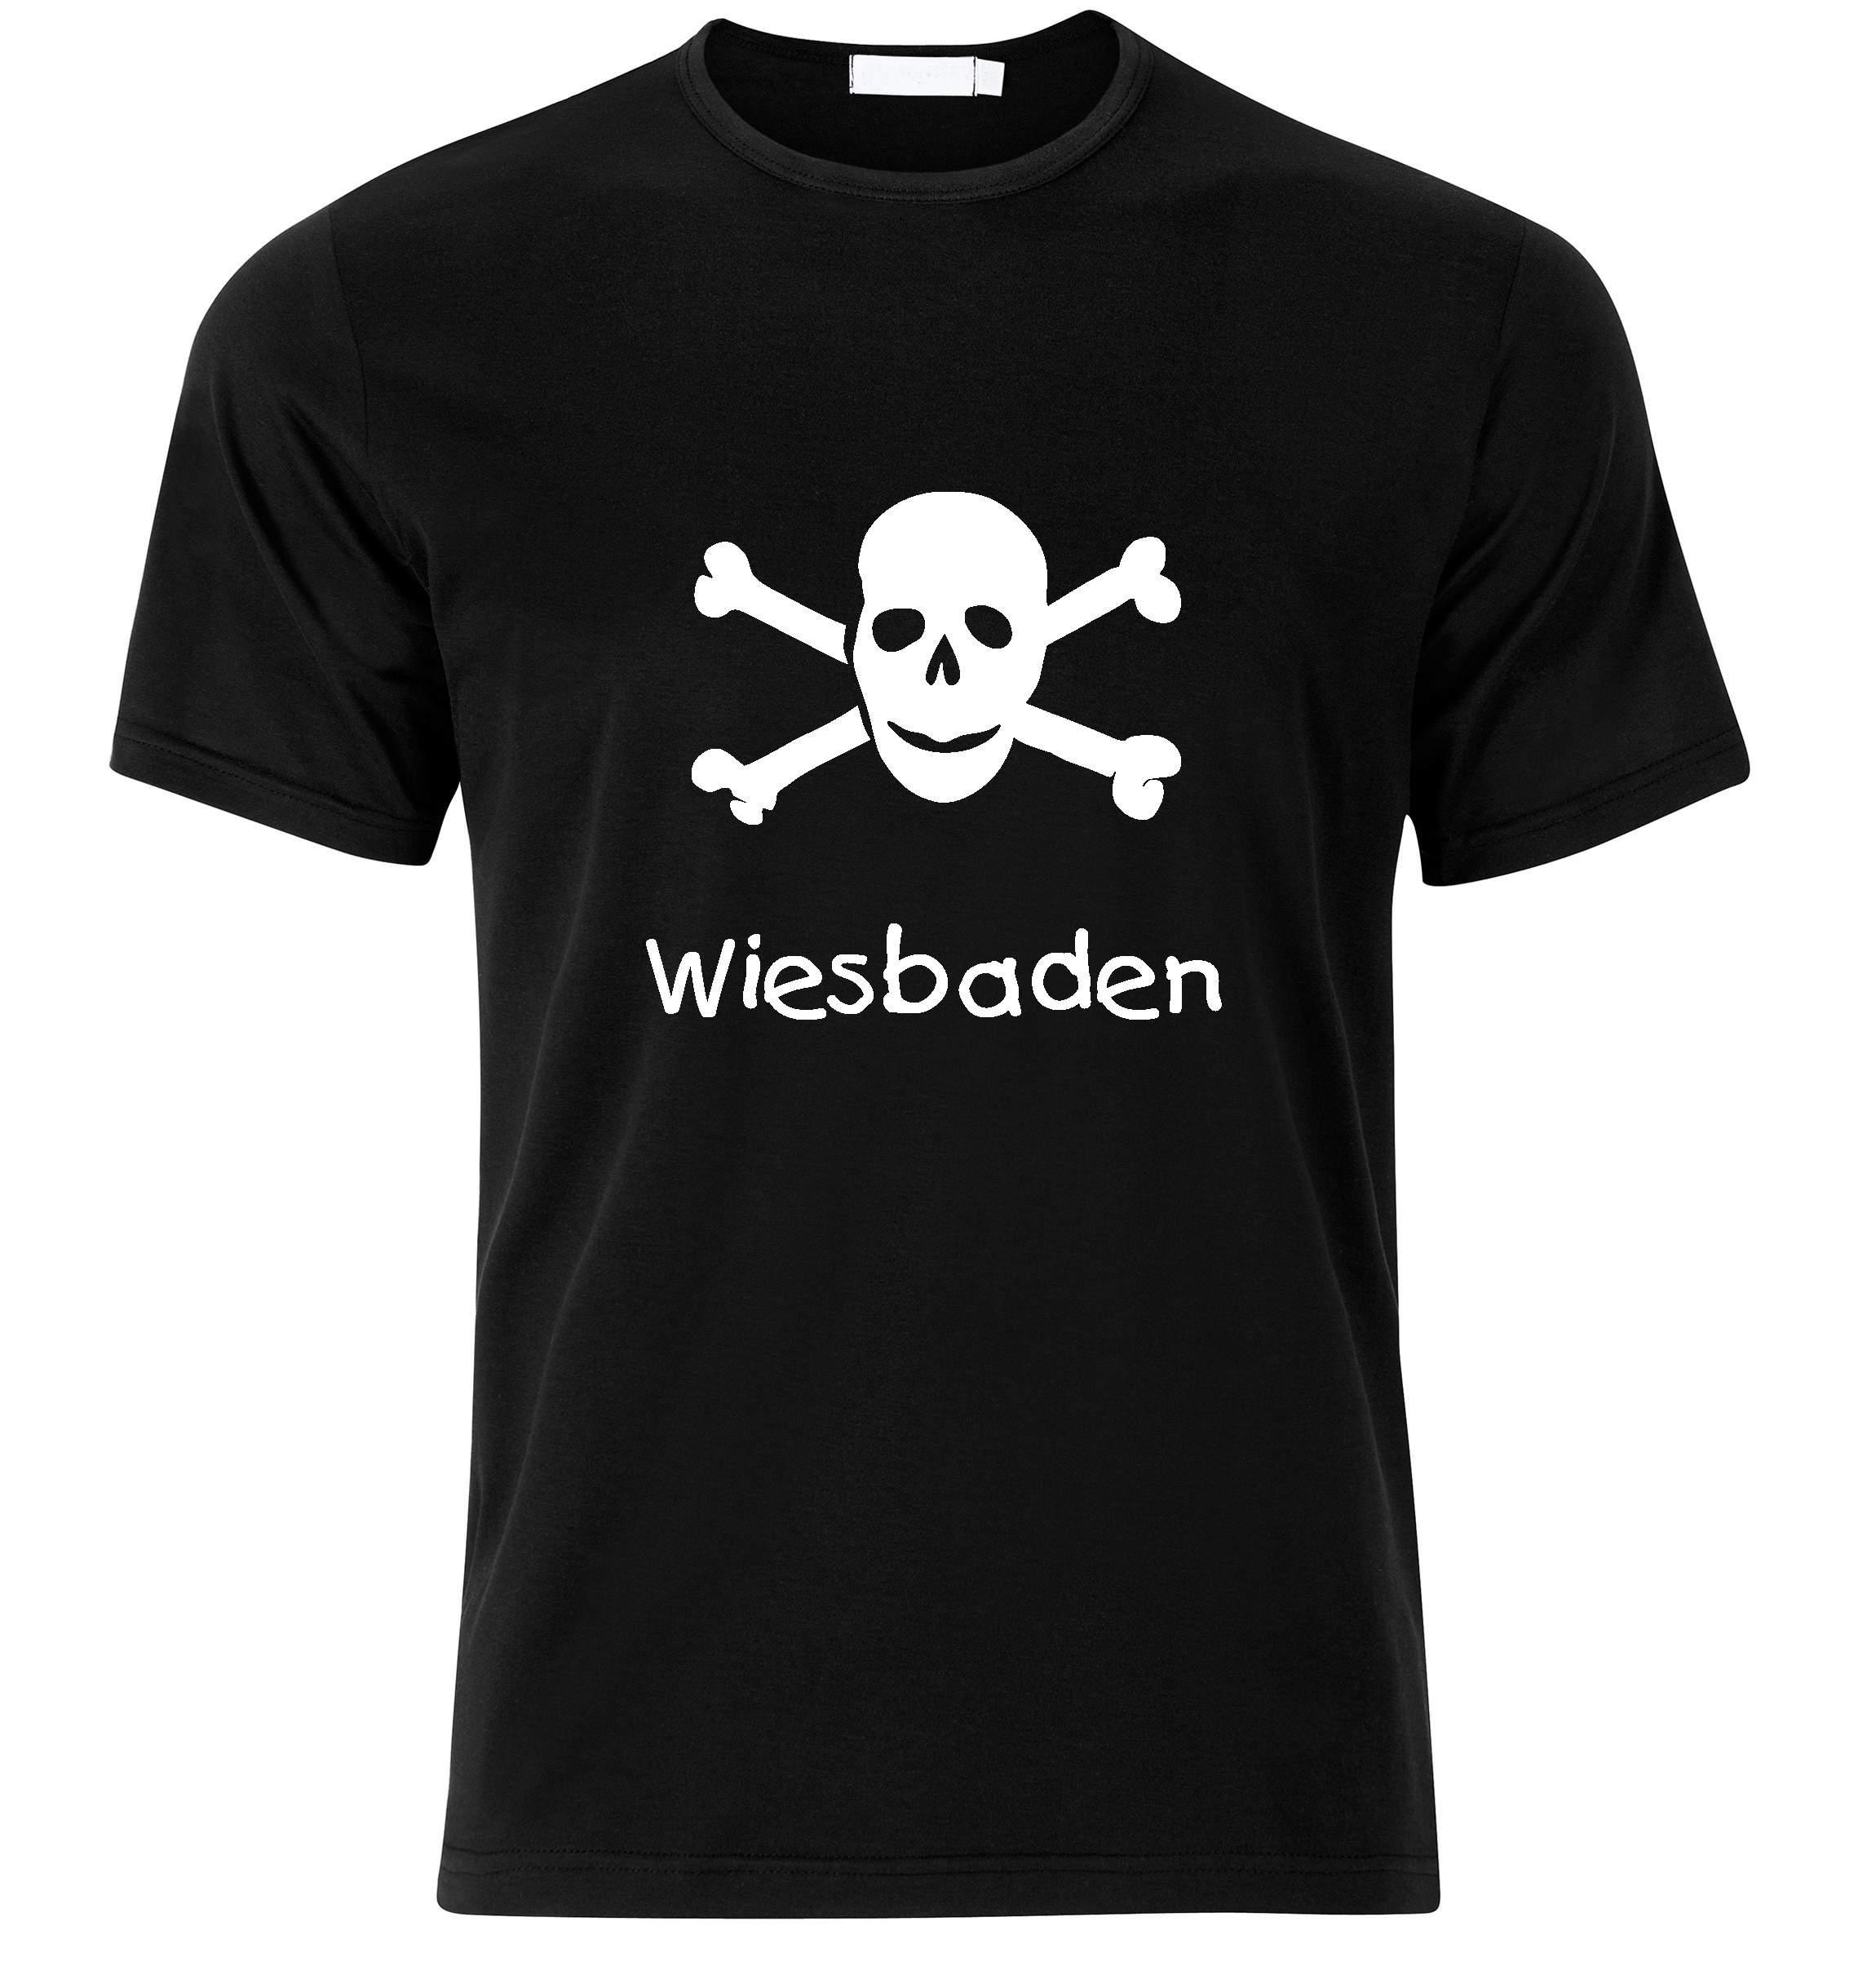 T-Shirt Wiesbaden Jolly Roger, Totenkopf